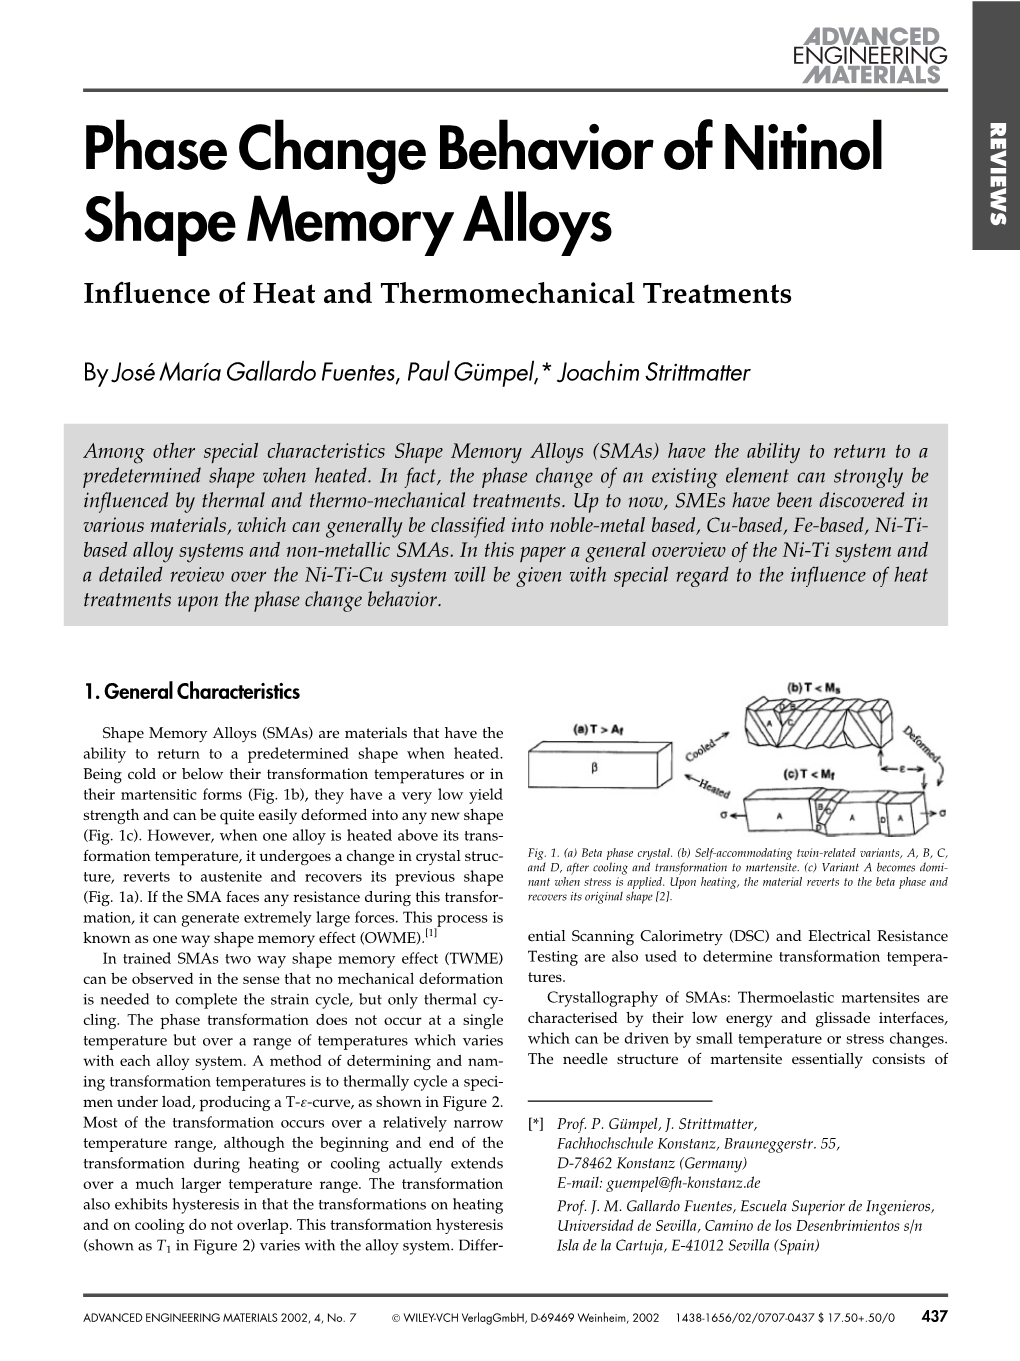 Phase Change Behavior of Nitinol Shape Memory Alloys REVIEWS